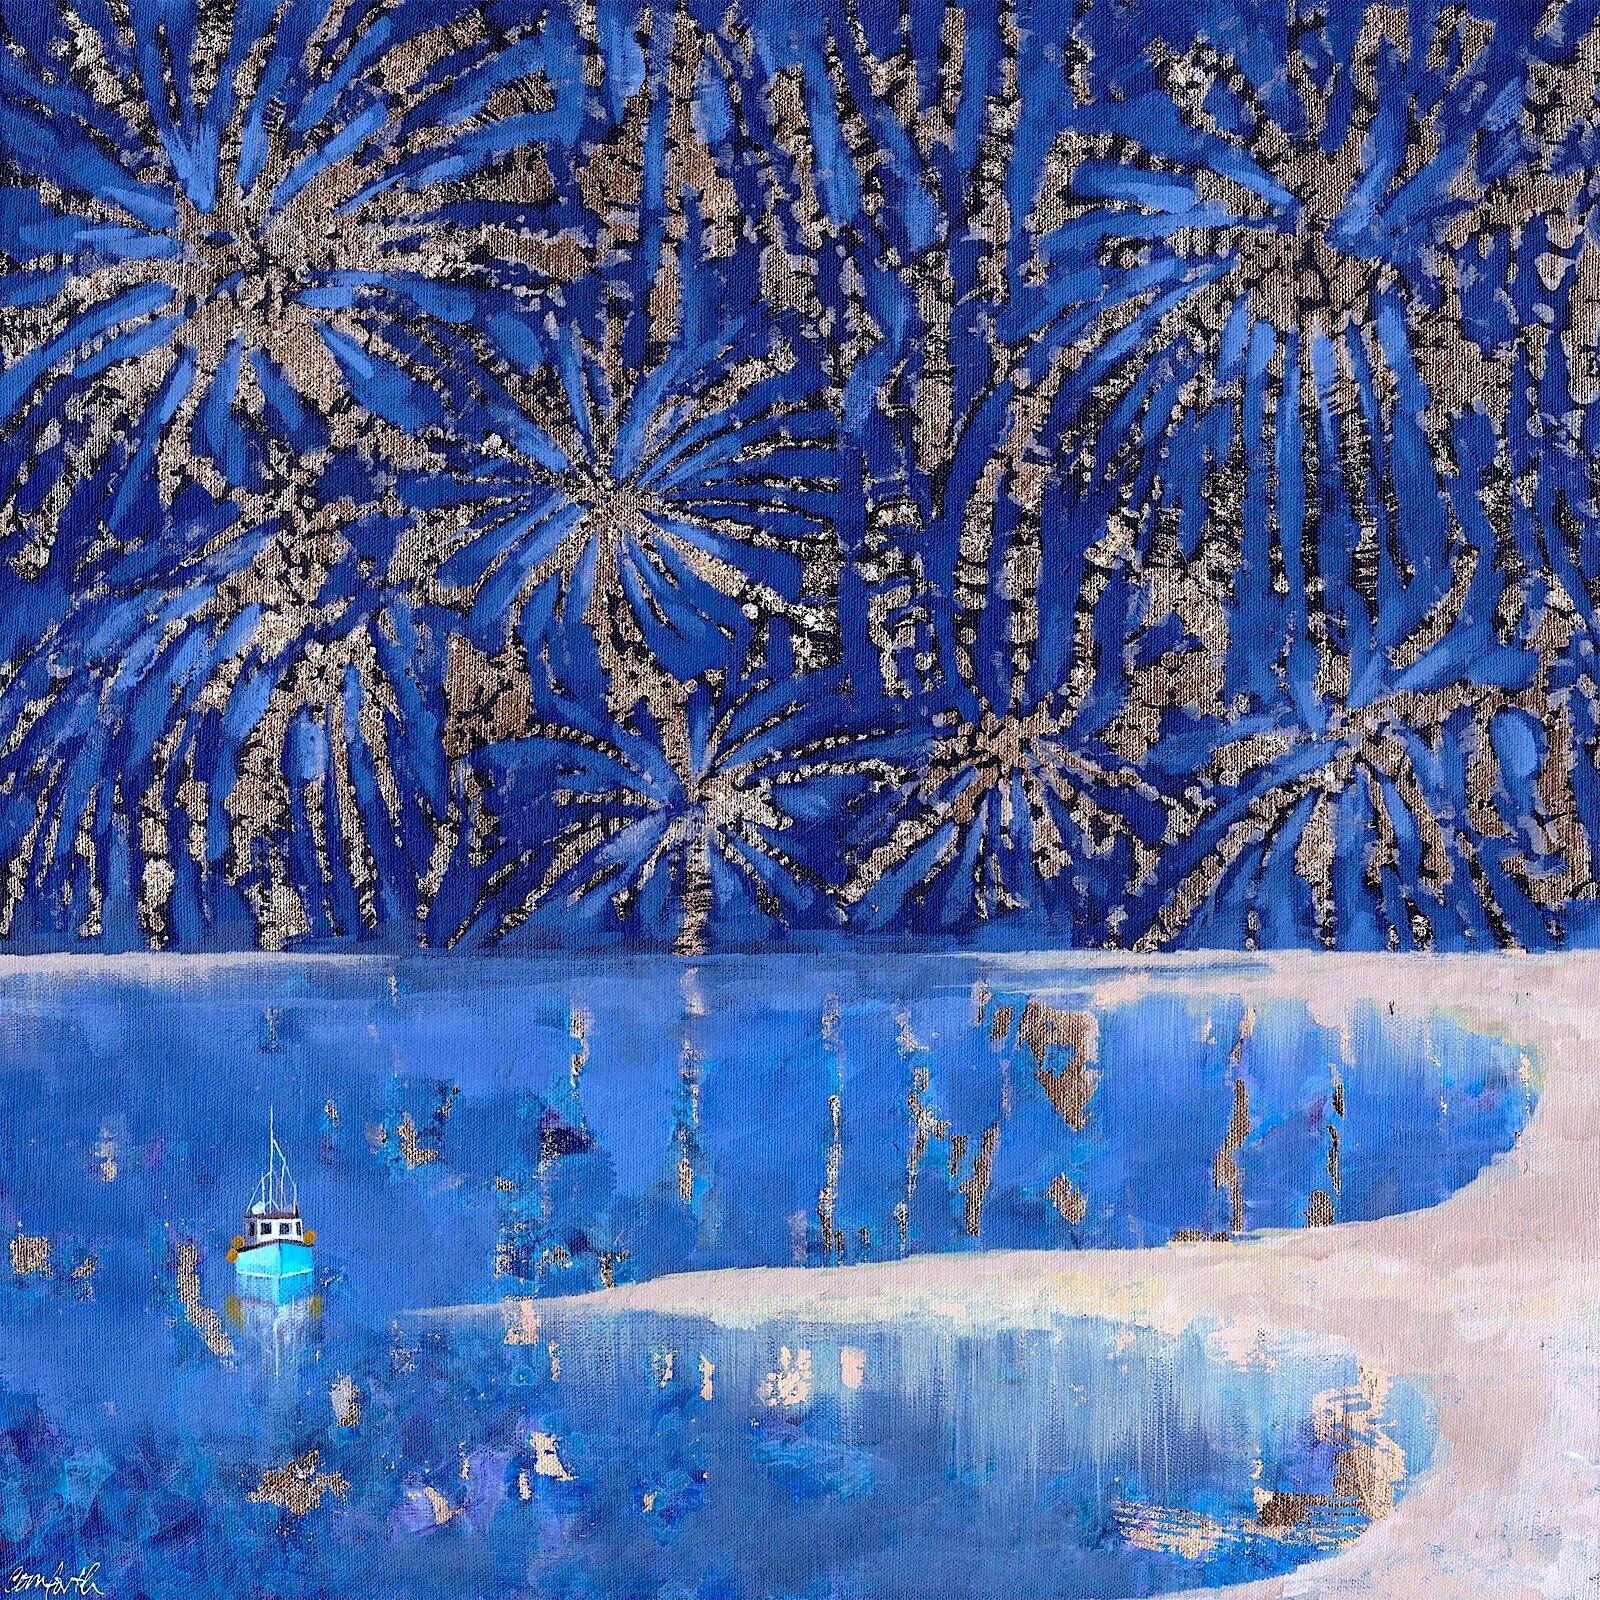 A Winter Fireworks-ORIGINAL IMPRESSIONISM Seascape oil painting-contemporary art